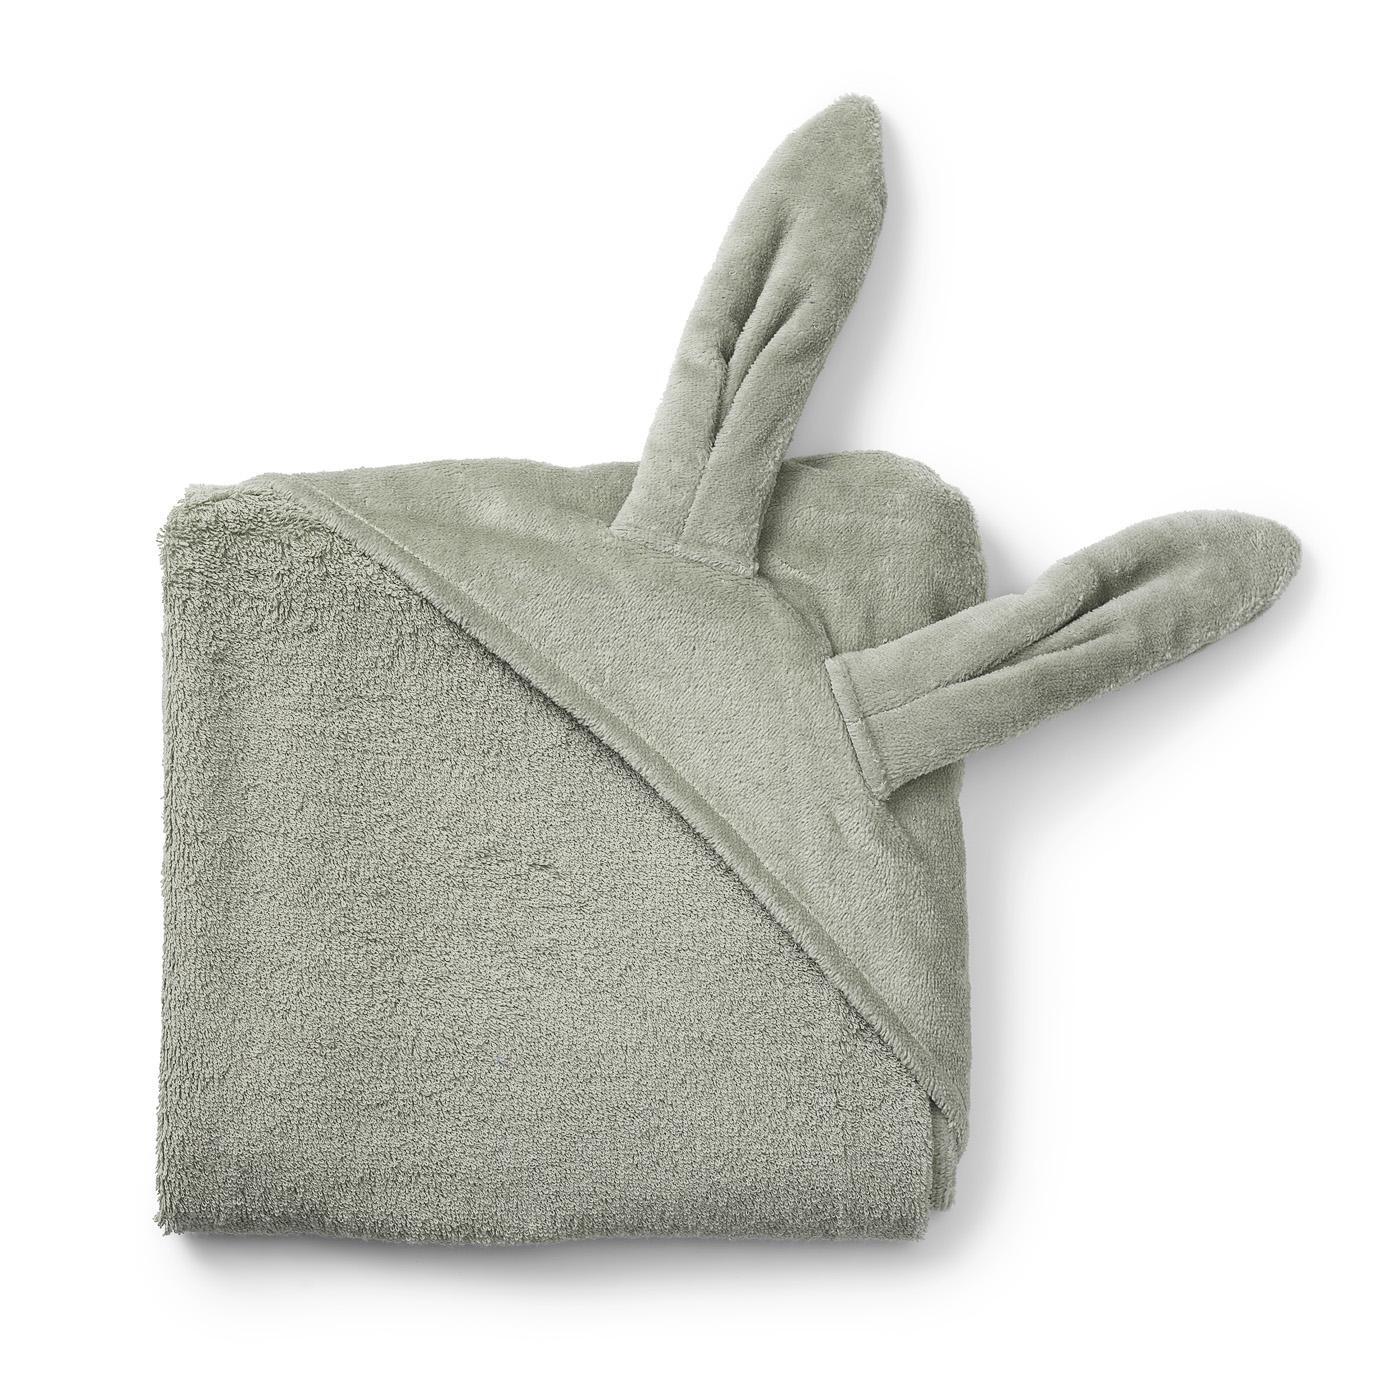 Elodie Details hooded towel 80x80cm, Mineral Green Bunny - Elodie Details